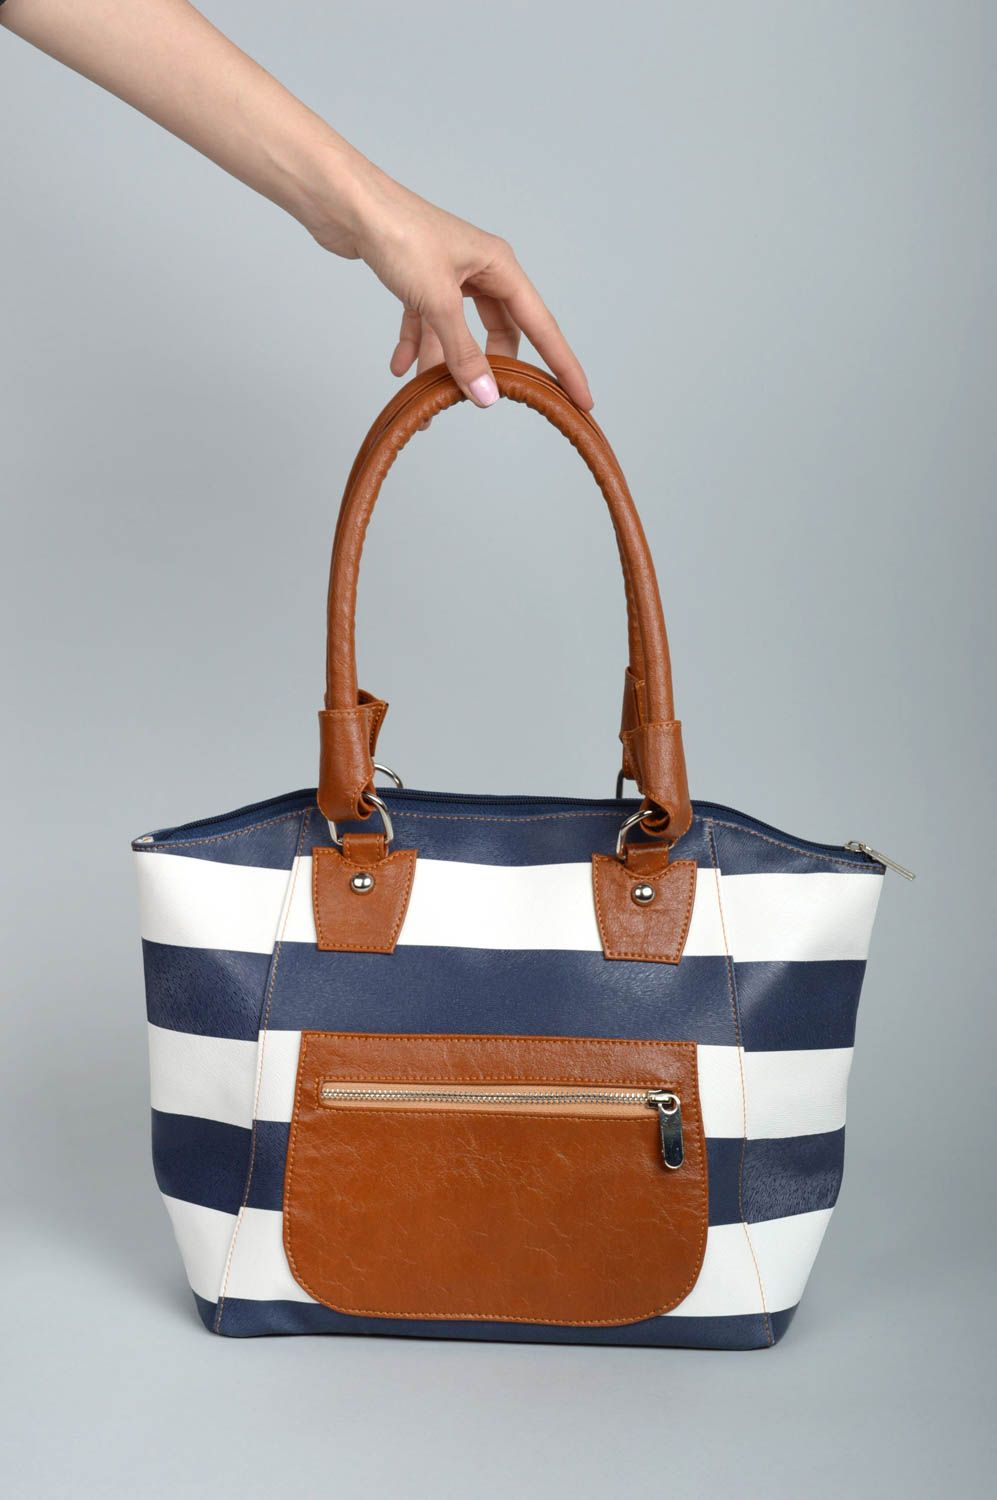 Handmade leatherette shoulder bag striped bag pretty bag for women perfect gift photo 3